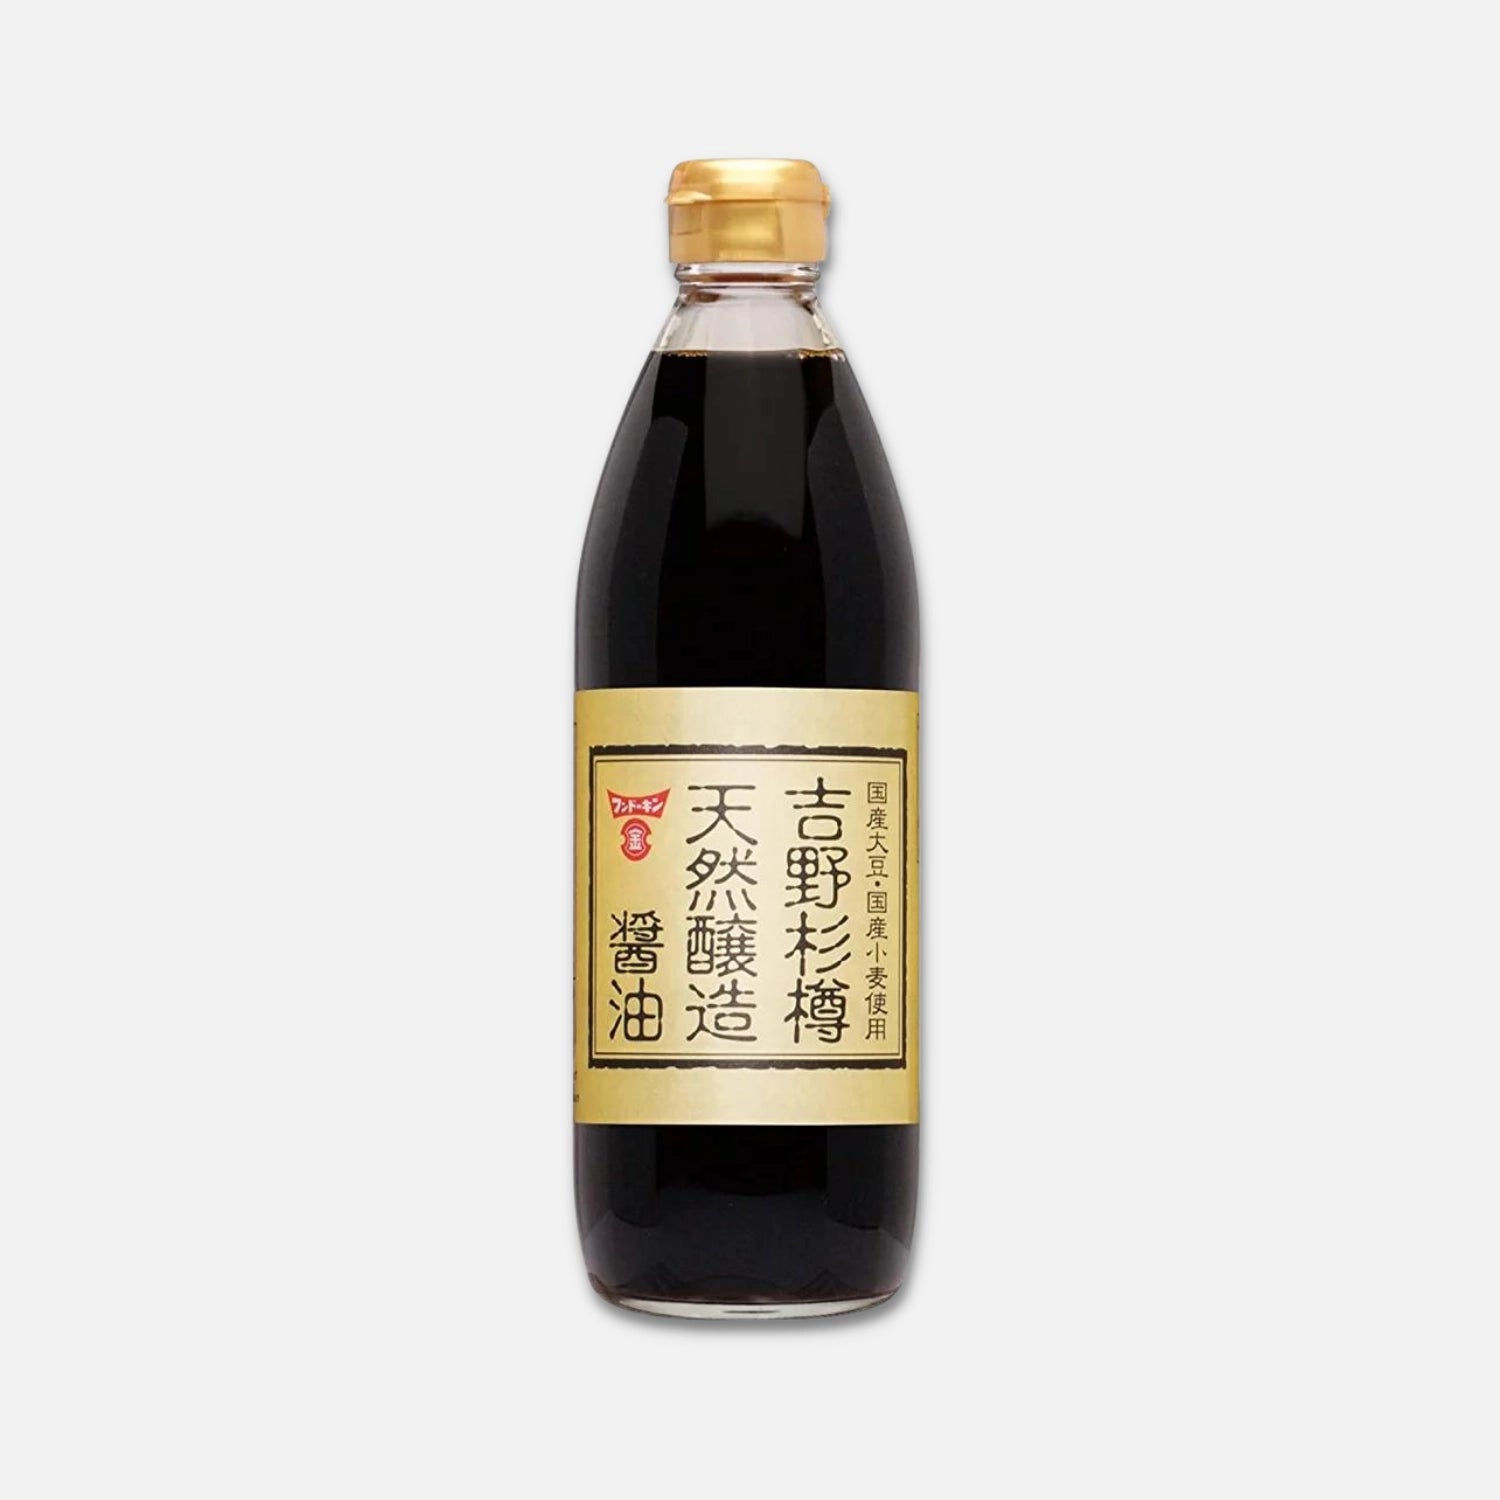 Fundokin Cedar Barrel Aged 1 Year Naturally Brewed Soy Sauce 500ml - Buy Me Japan